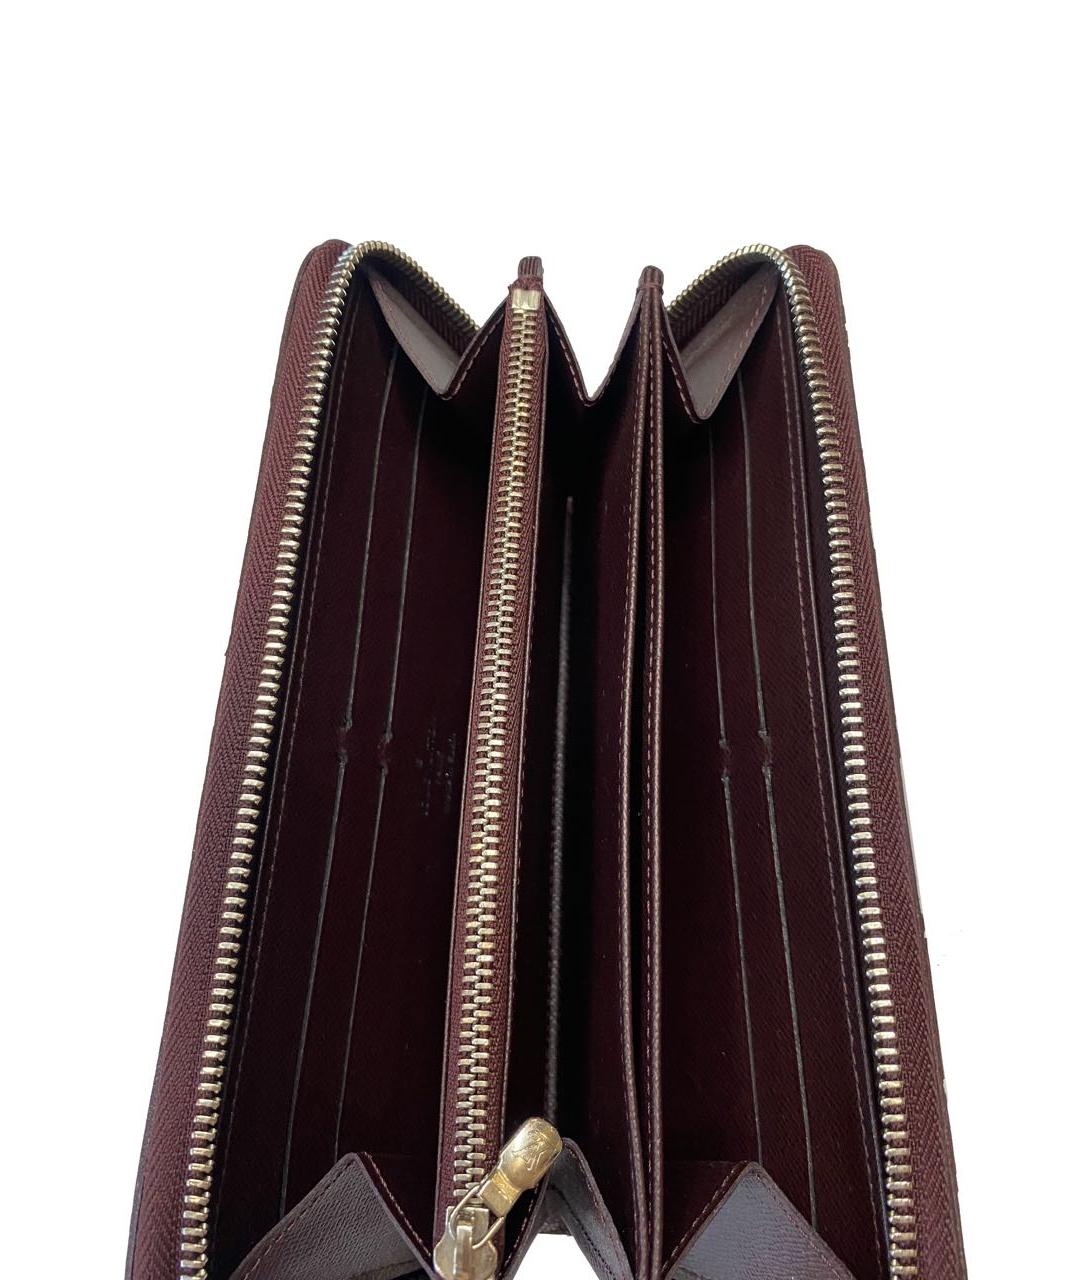 LOUIS VUITTON PRE-OWNED Бордовый кожаный кошелек, фото 3